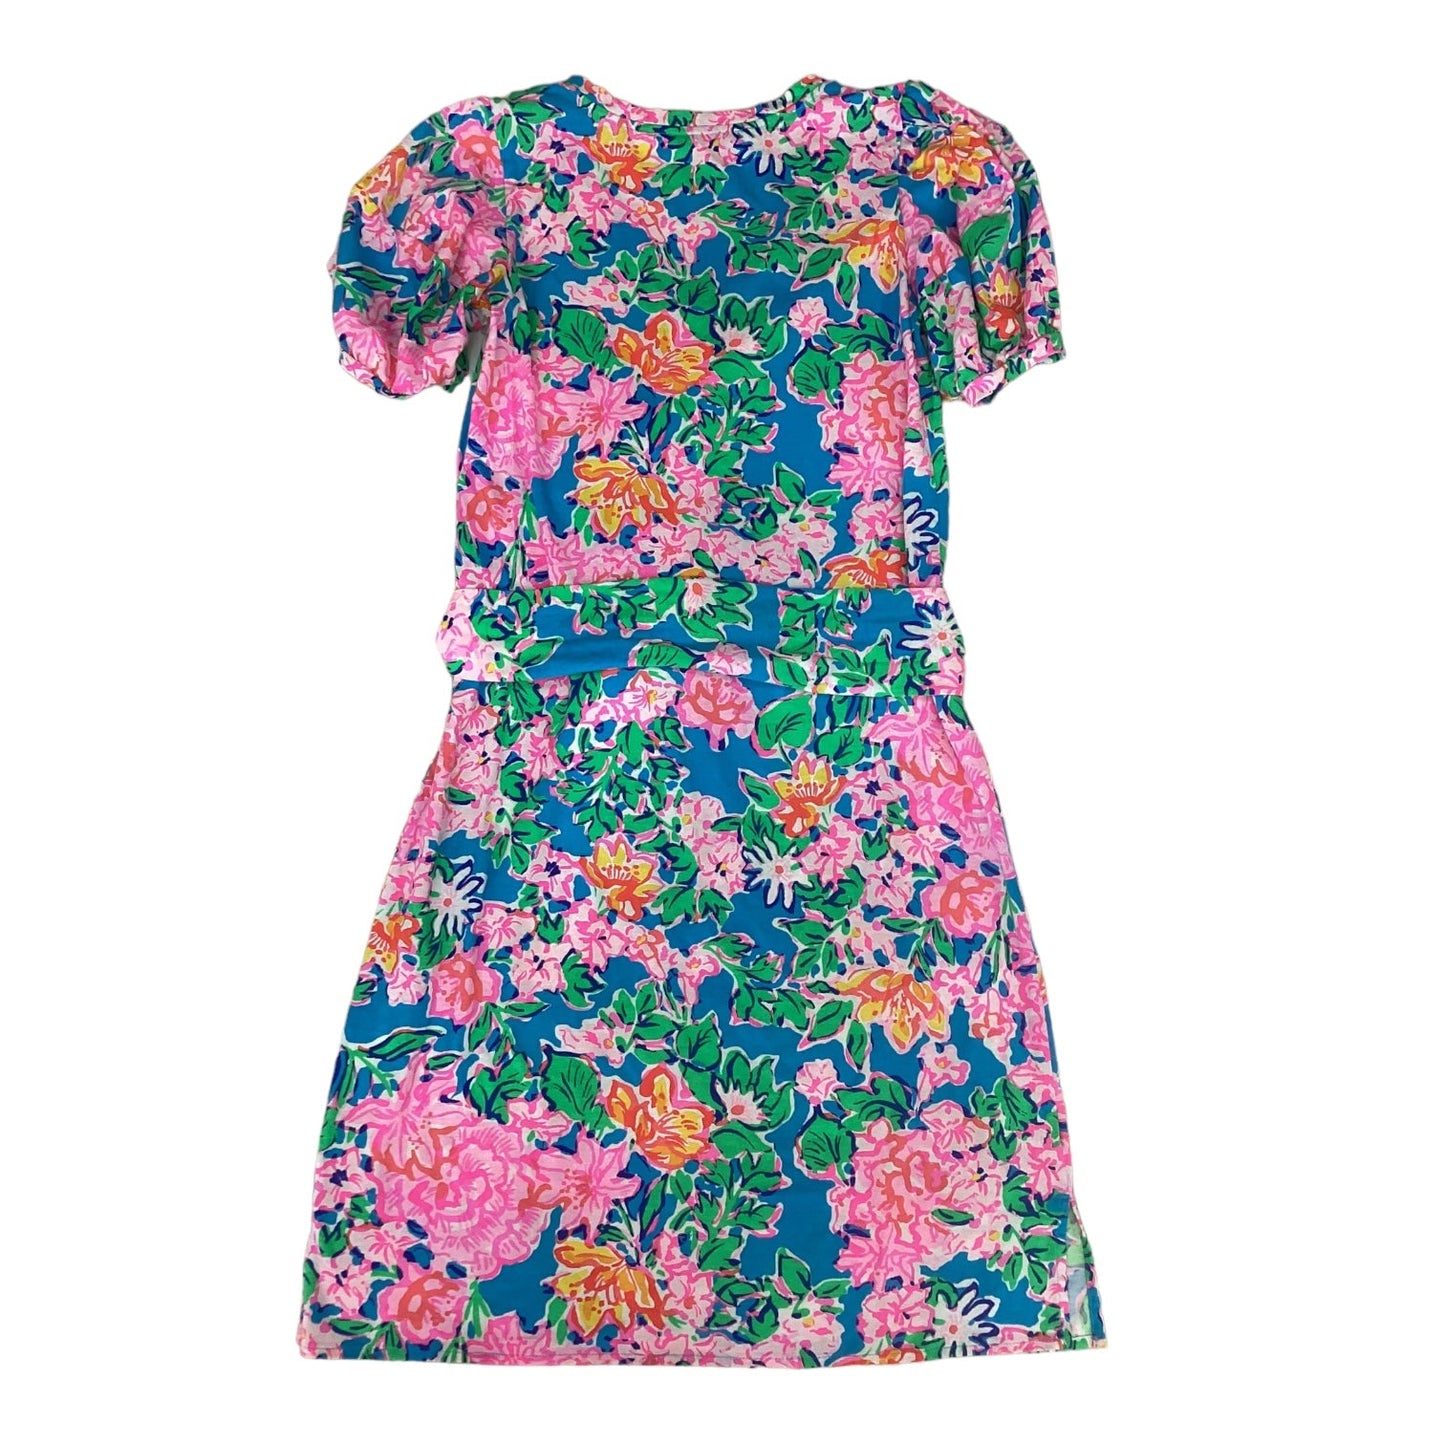 Floral Print Dress Designer Lilly Pulitzer, Size Xs